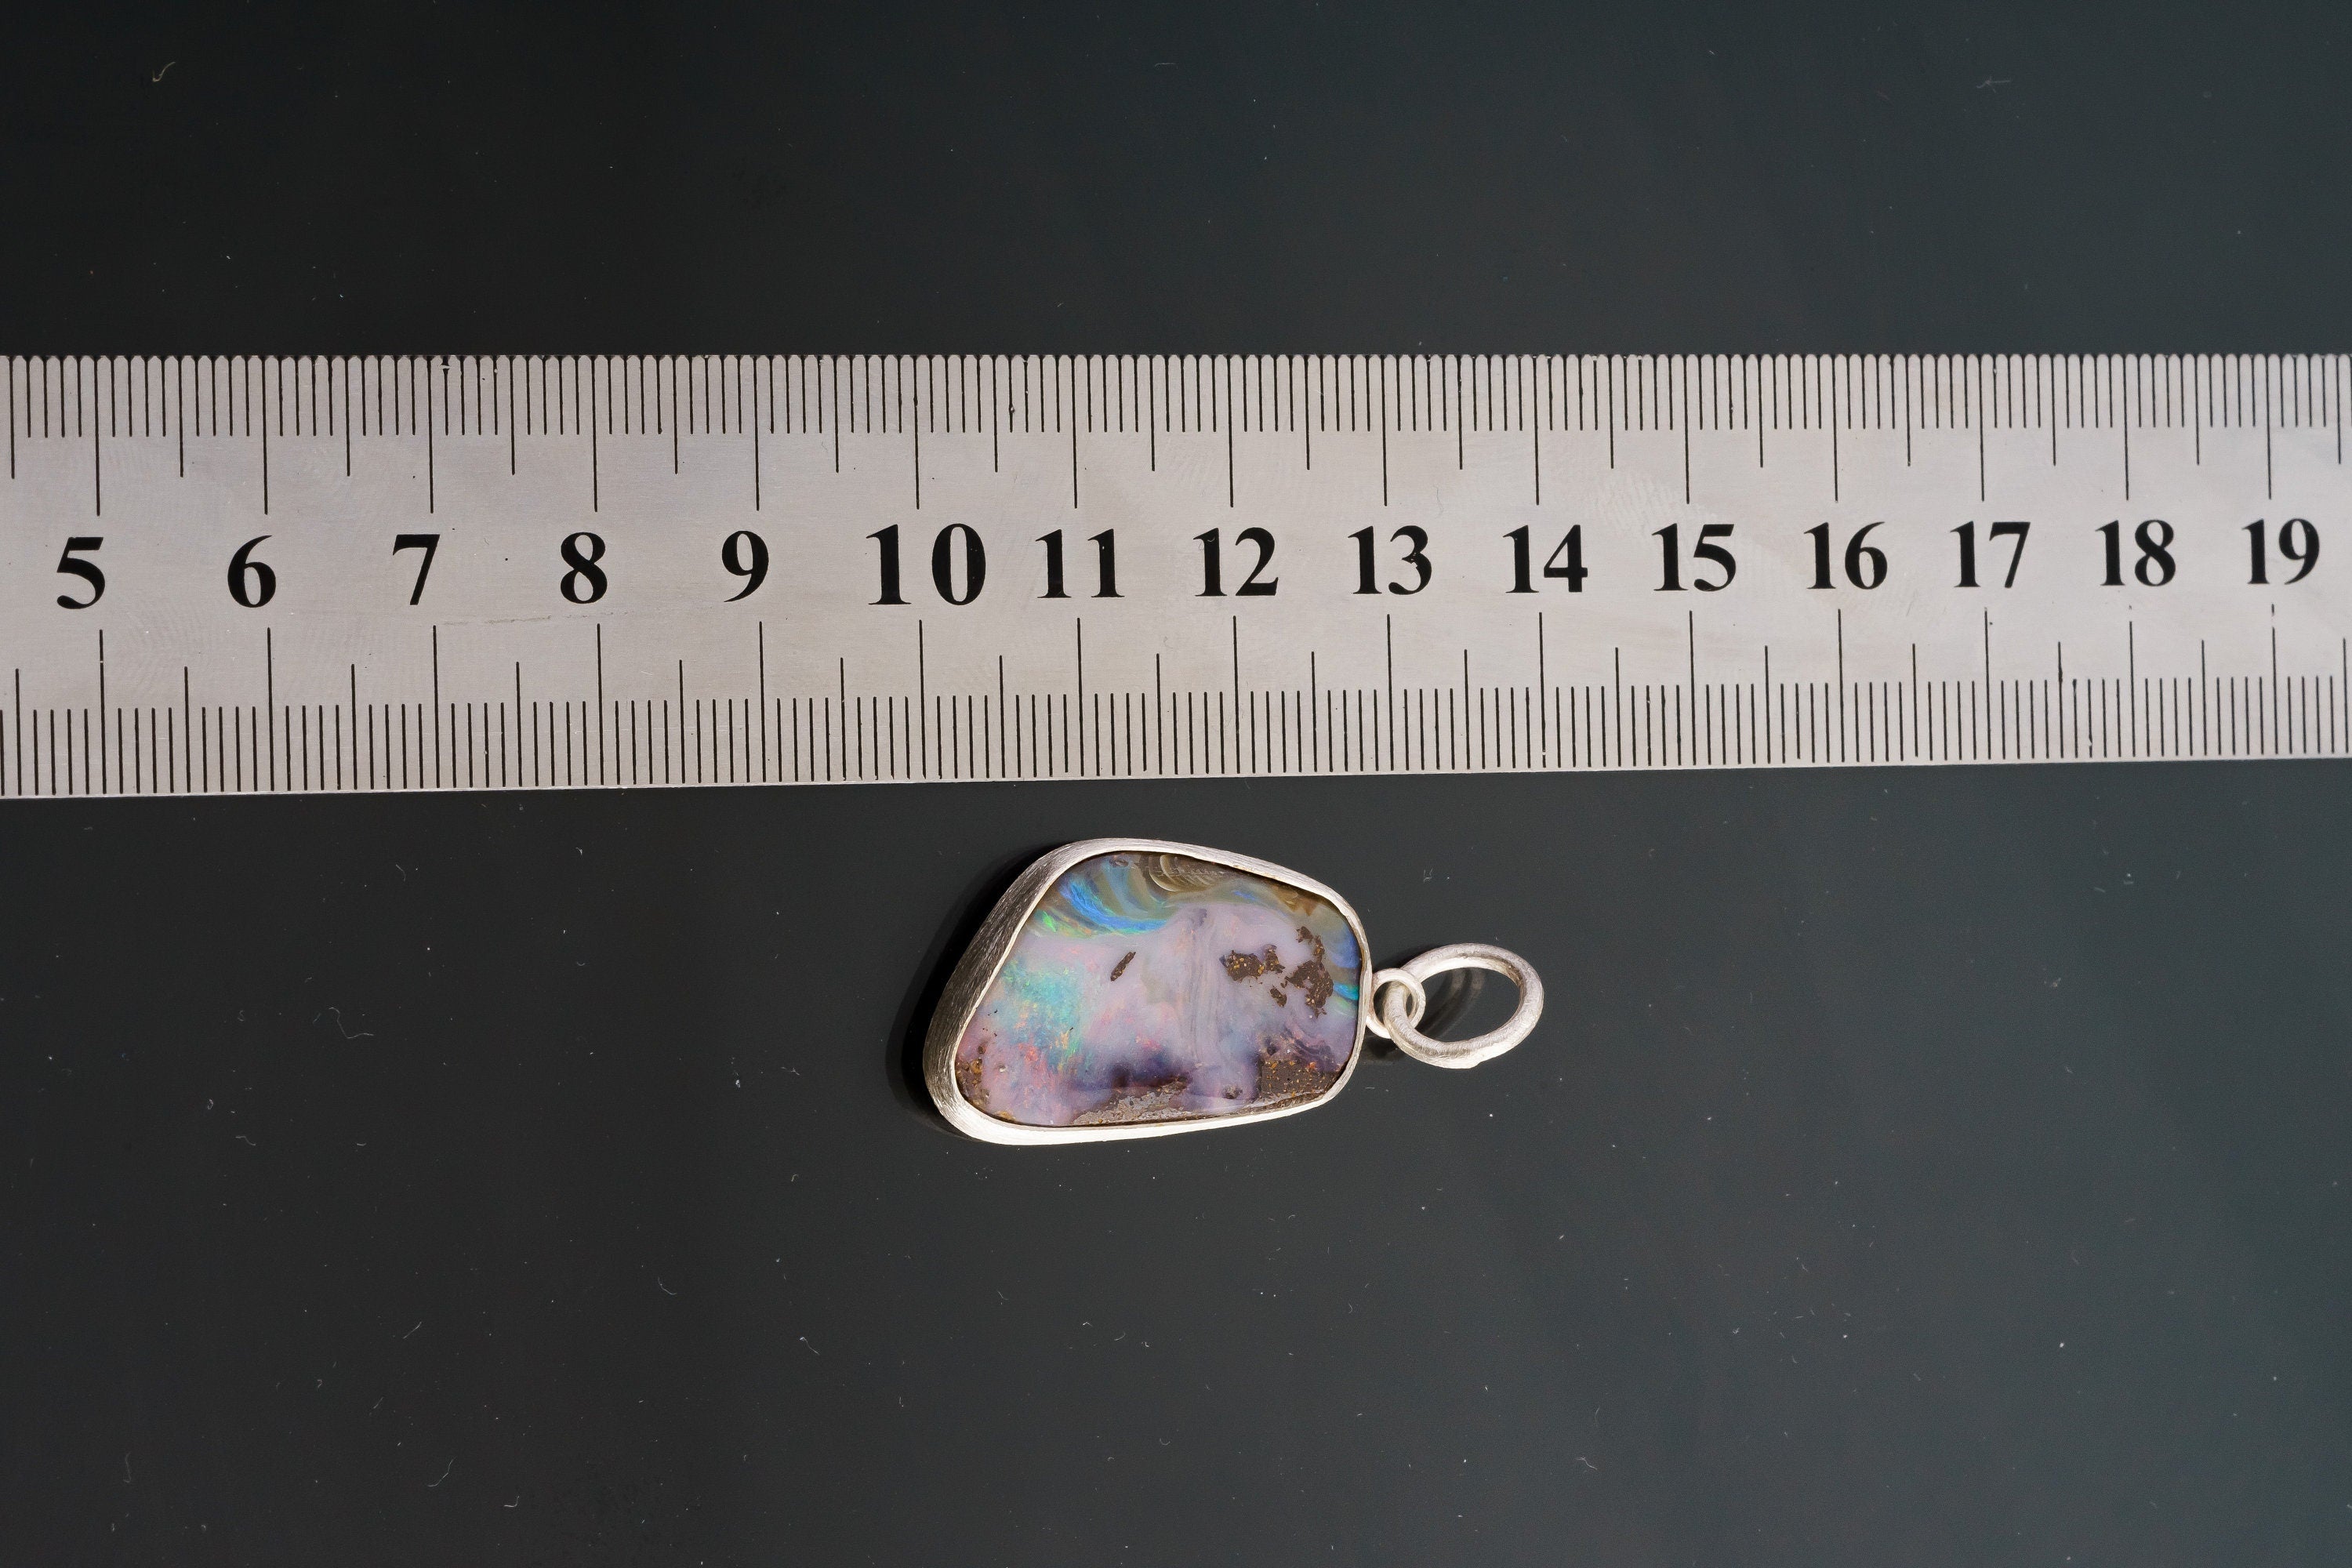 Australian Pink & blue Nebular Precious Freeform Boulder Opal - Natural Solid Opal - Textured 925 Silver Setting - Crystal Pendant Neckpiece